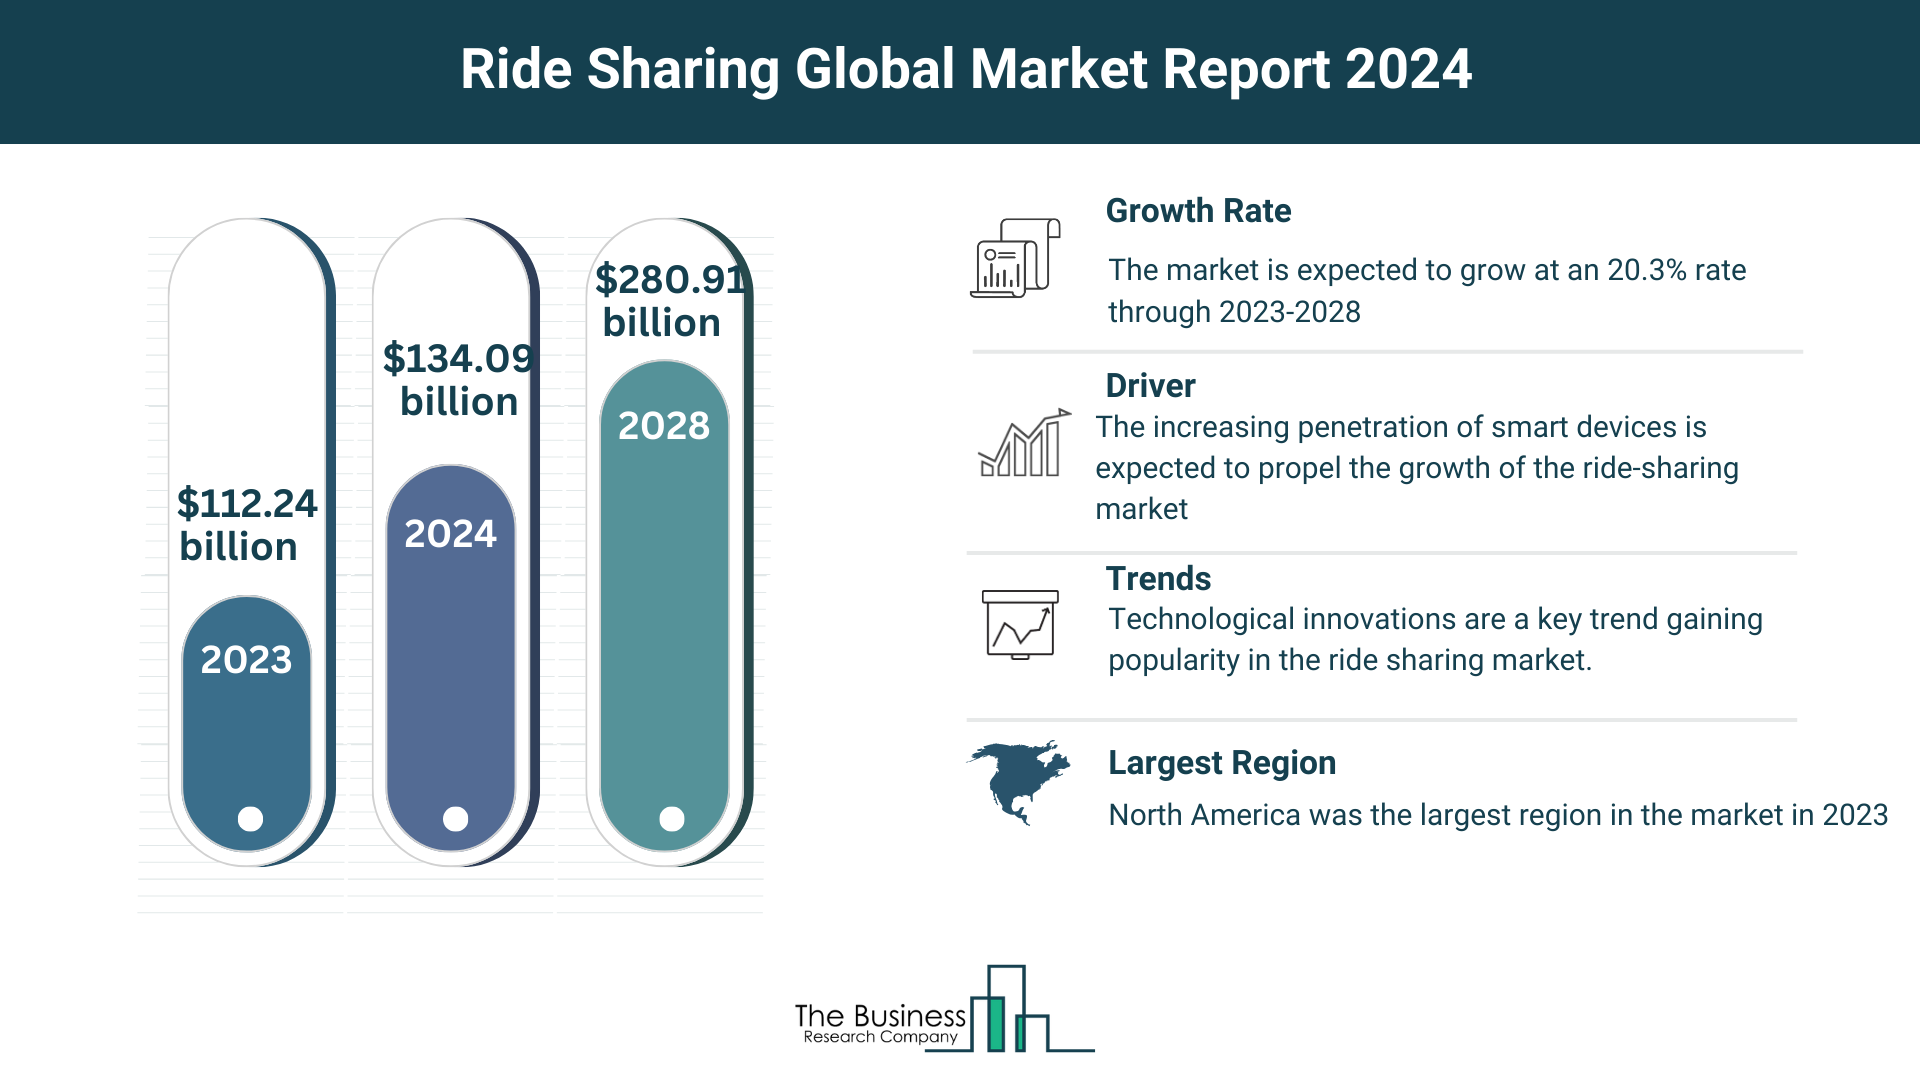 Global Ride Sharing Market, Global Ride Sharing Market ReporT